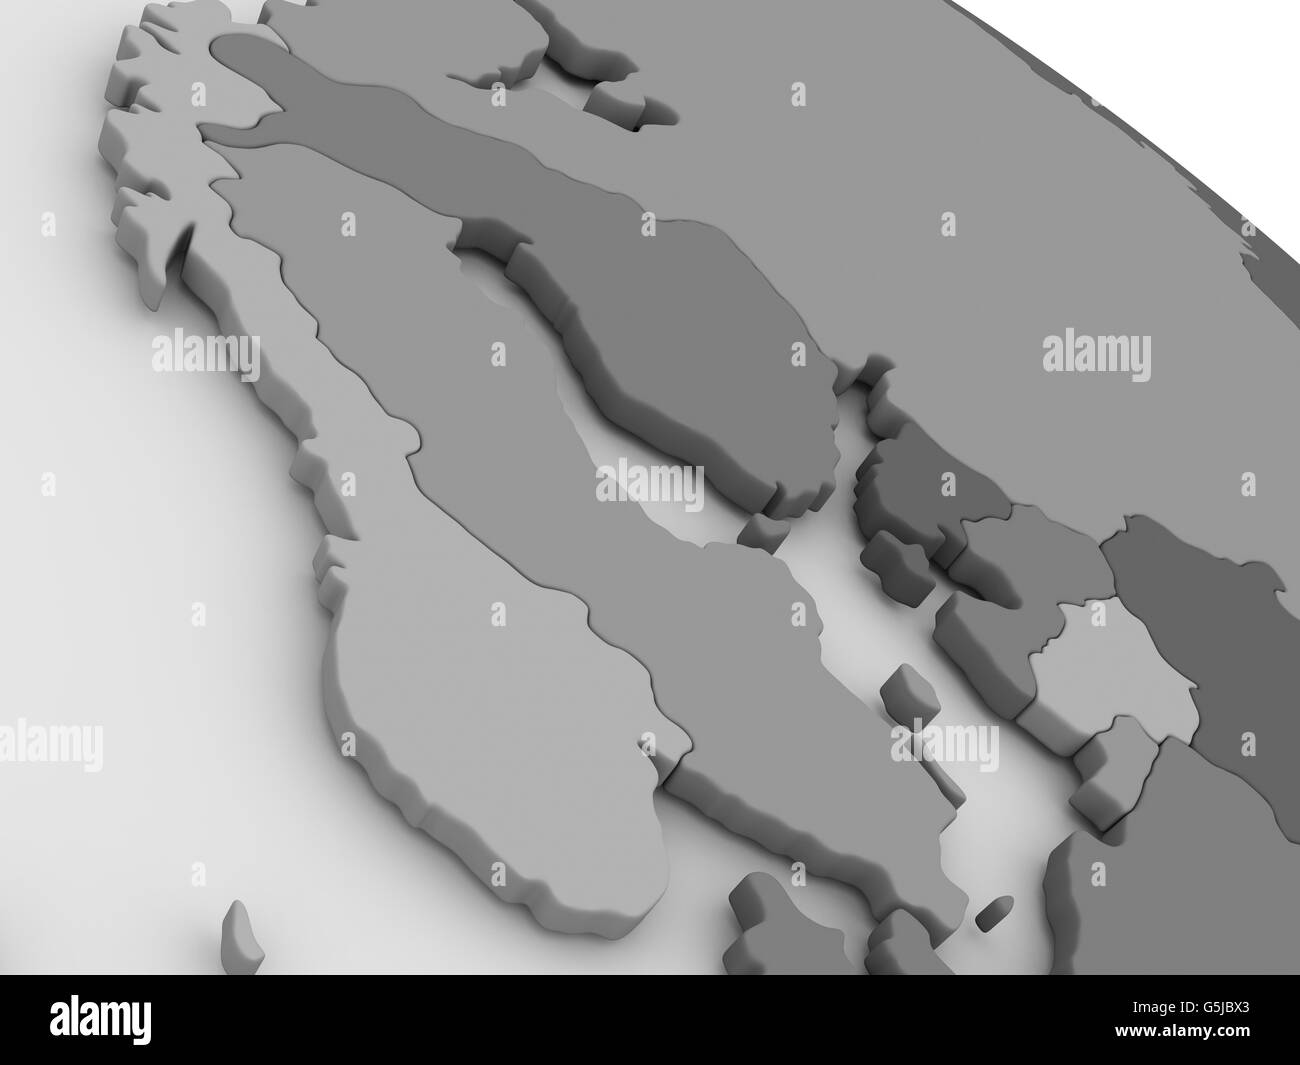 Map of Scandinavia on grey model of Earth. 3D illustration Stock Photo